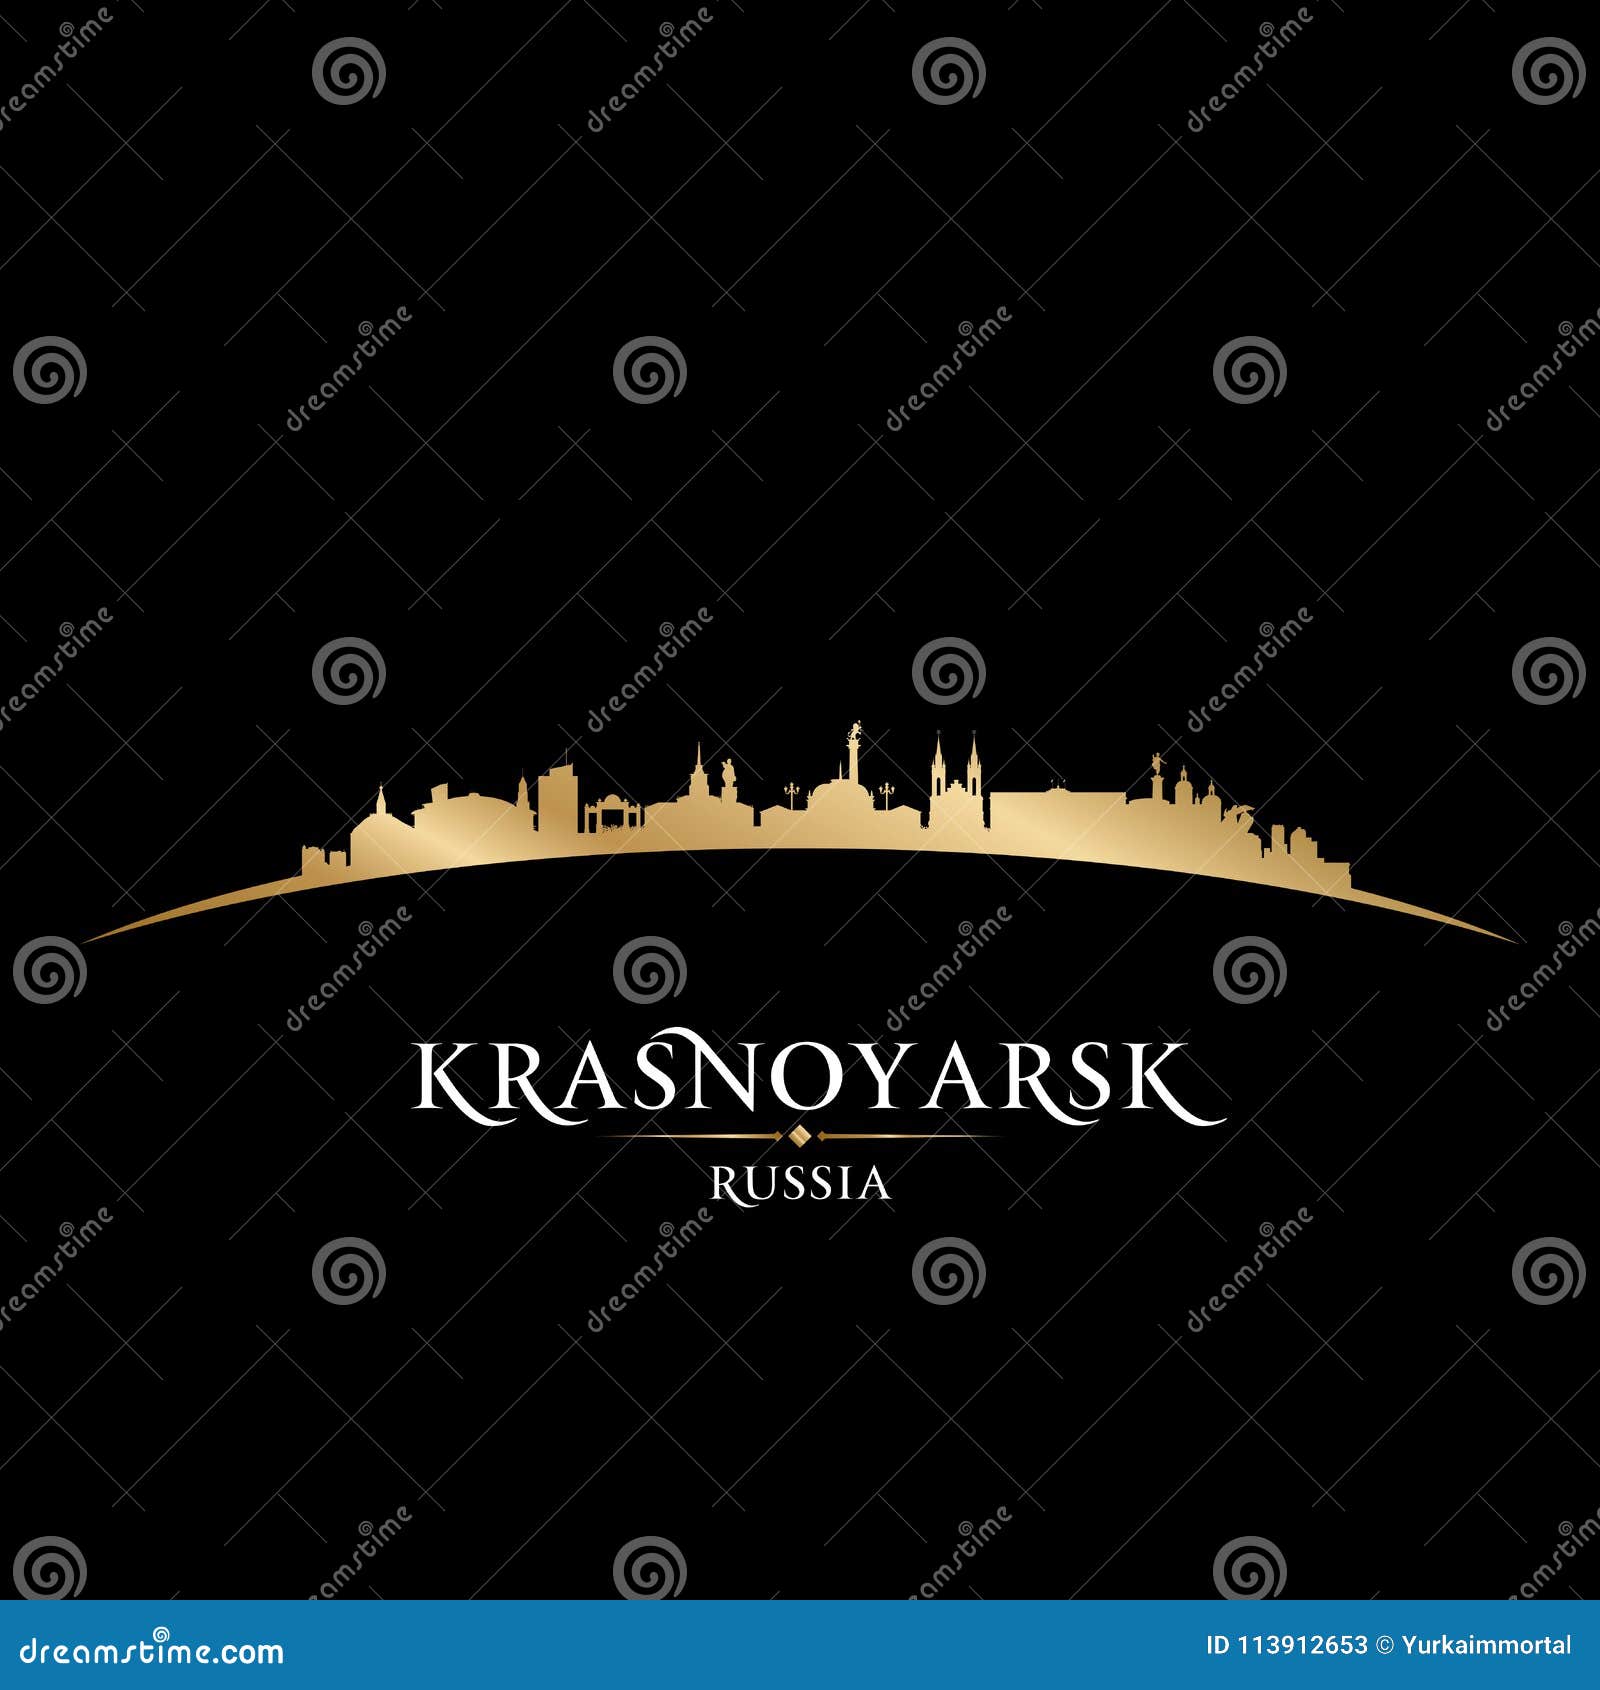 krasnoyarsk russia city skyline silhouette black background